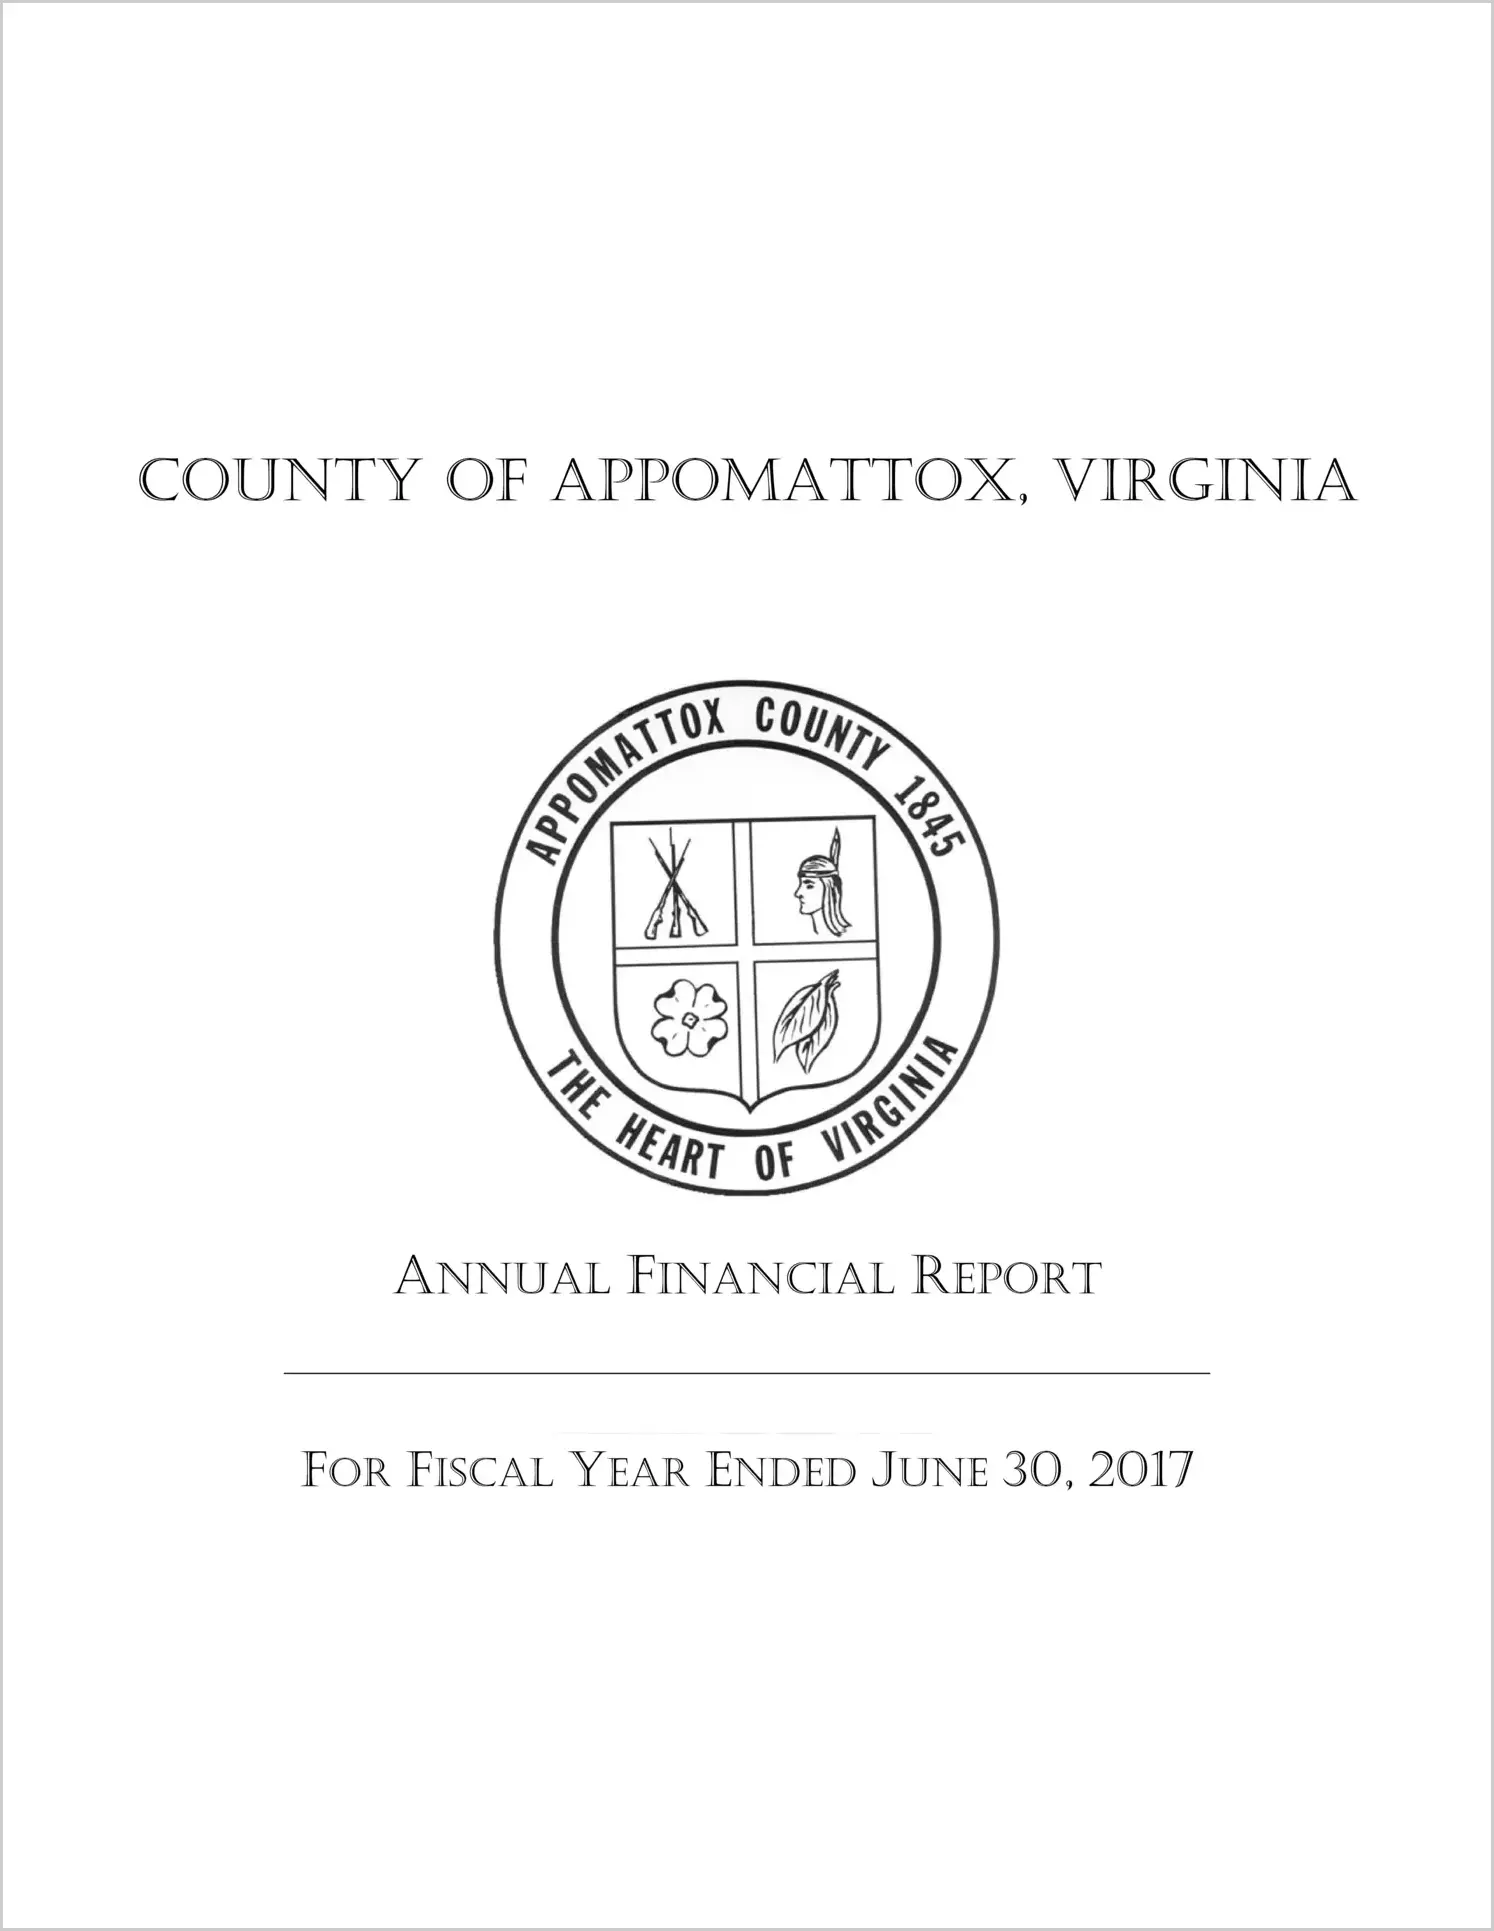 2017 Annual Financial Report for County of Appomattox